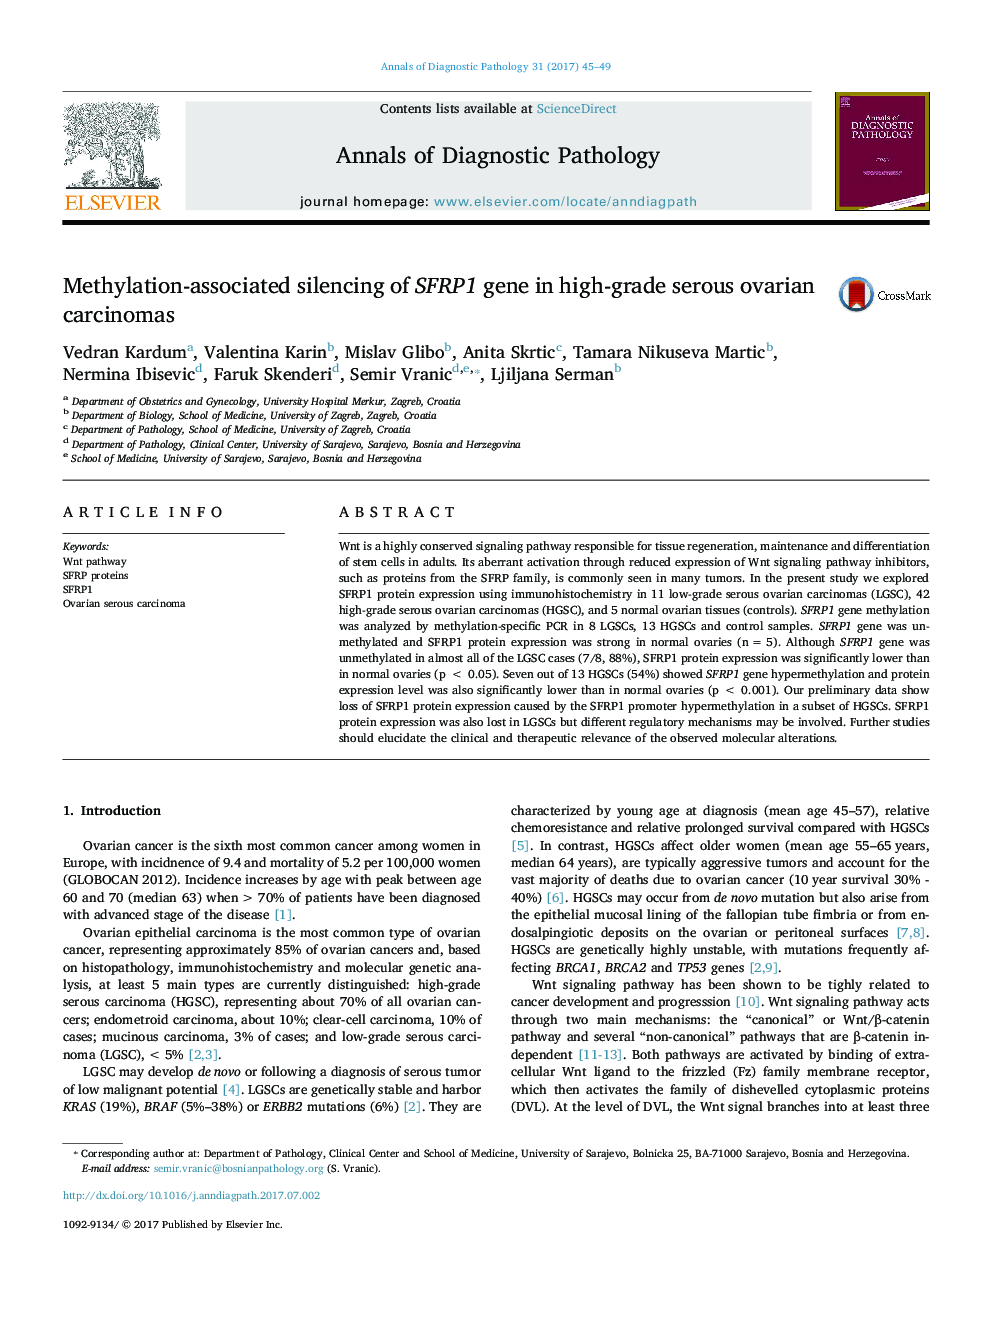 Methylation-associated silencing of SFRP1 gene in high-grade serous ovarian carcinomas